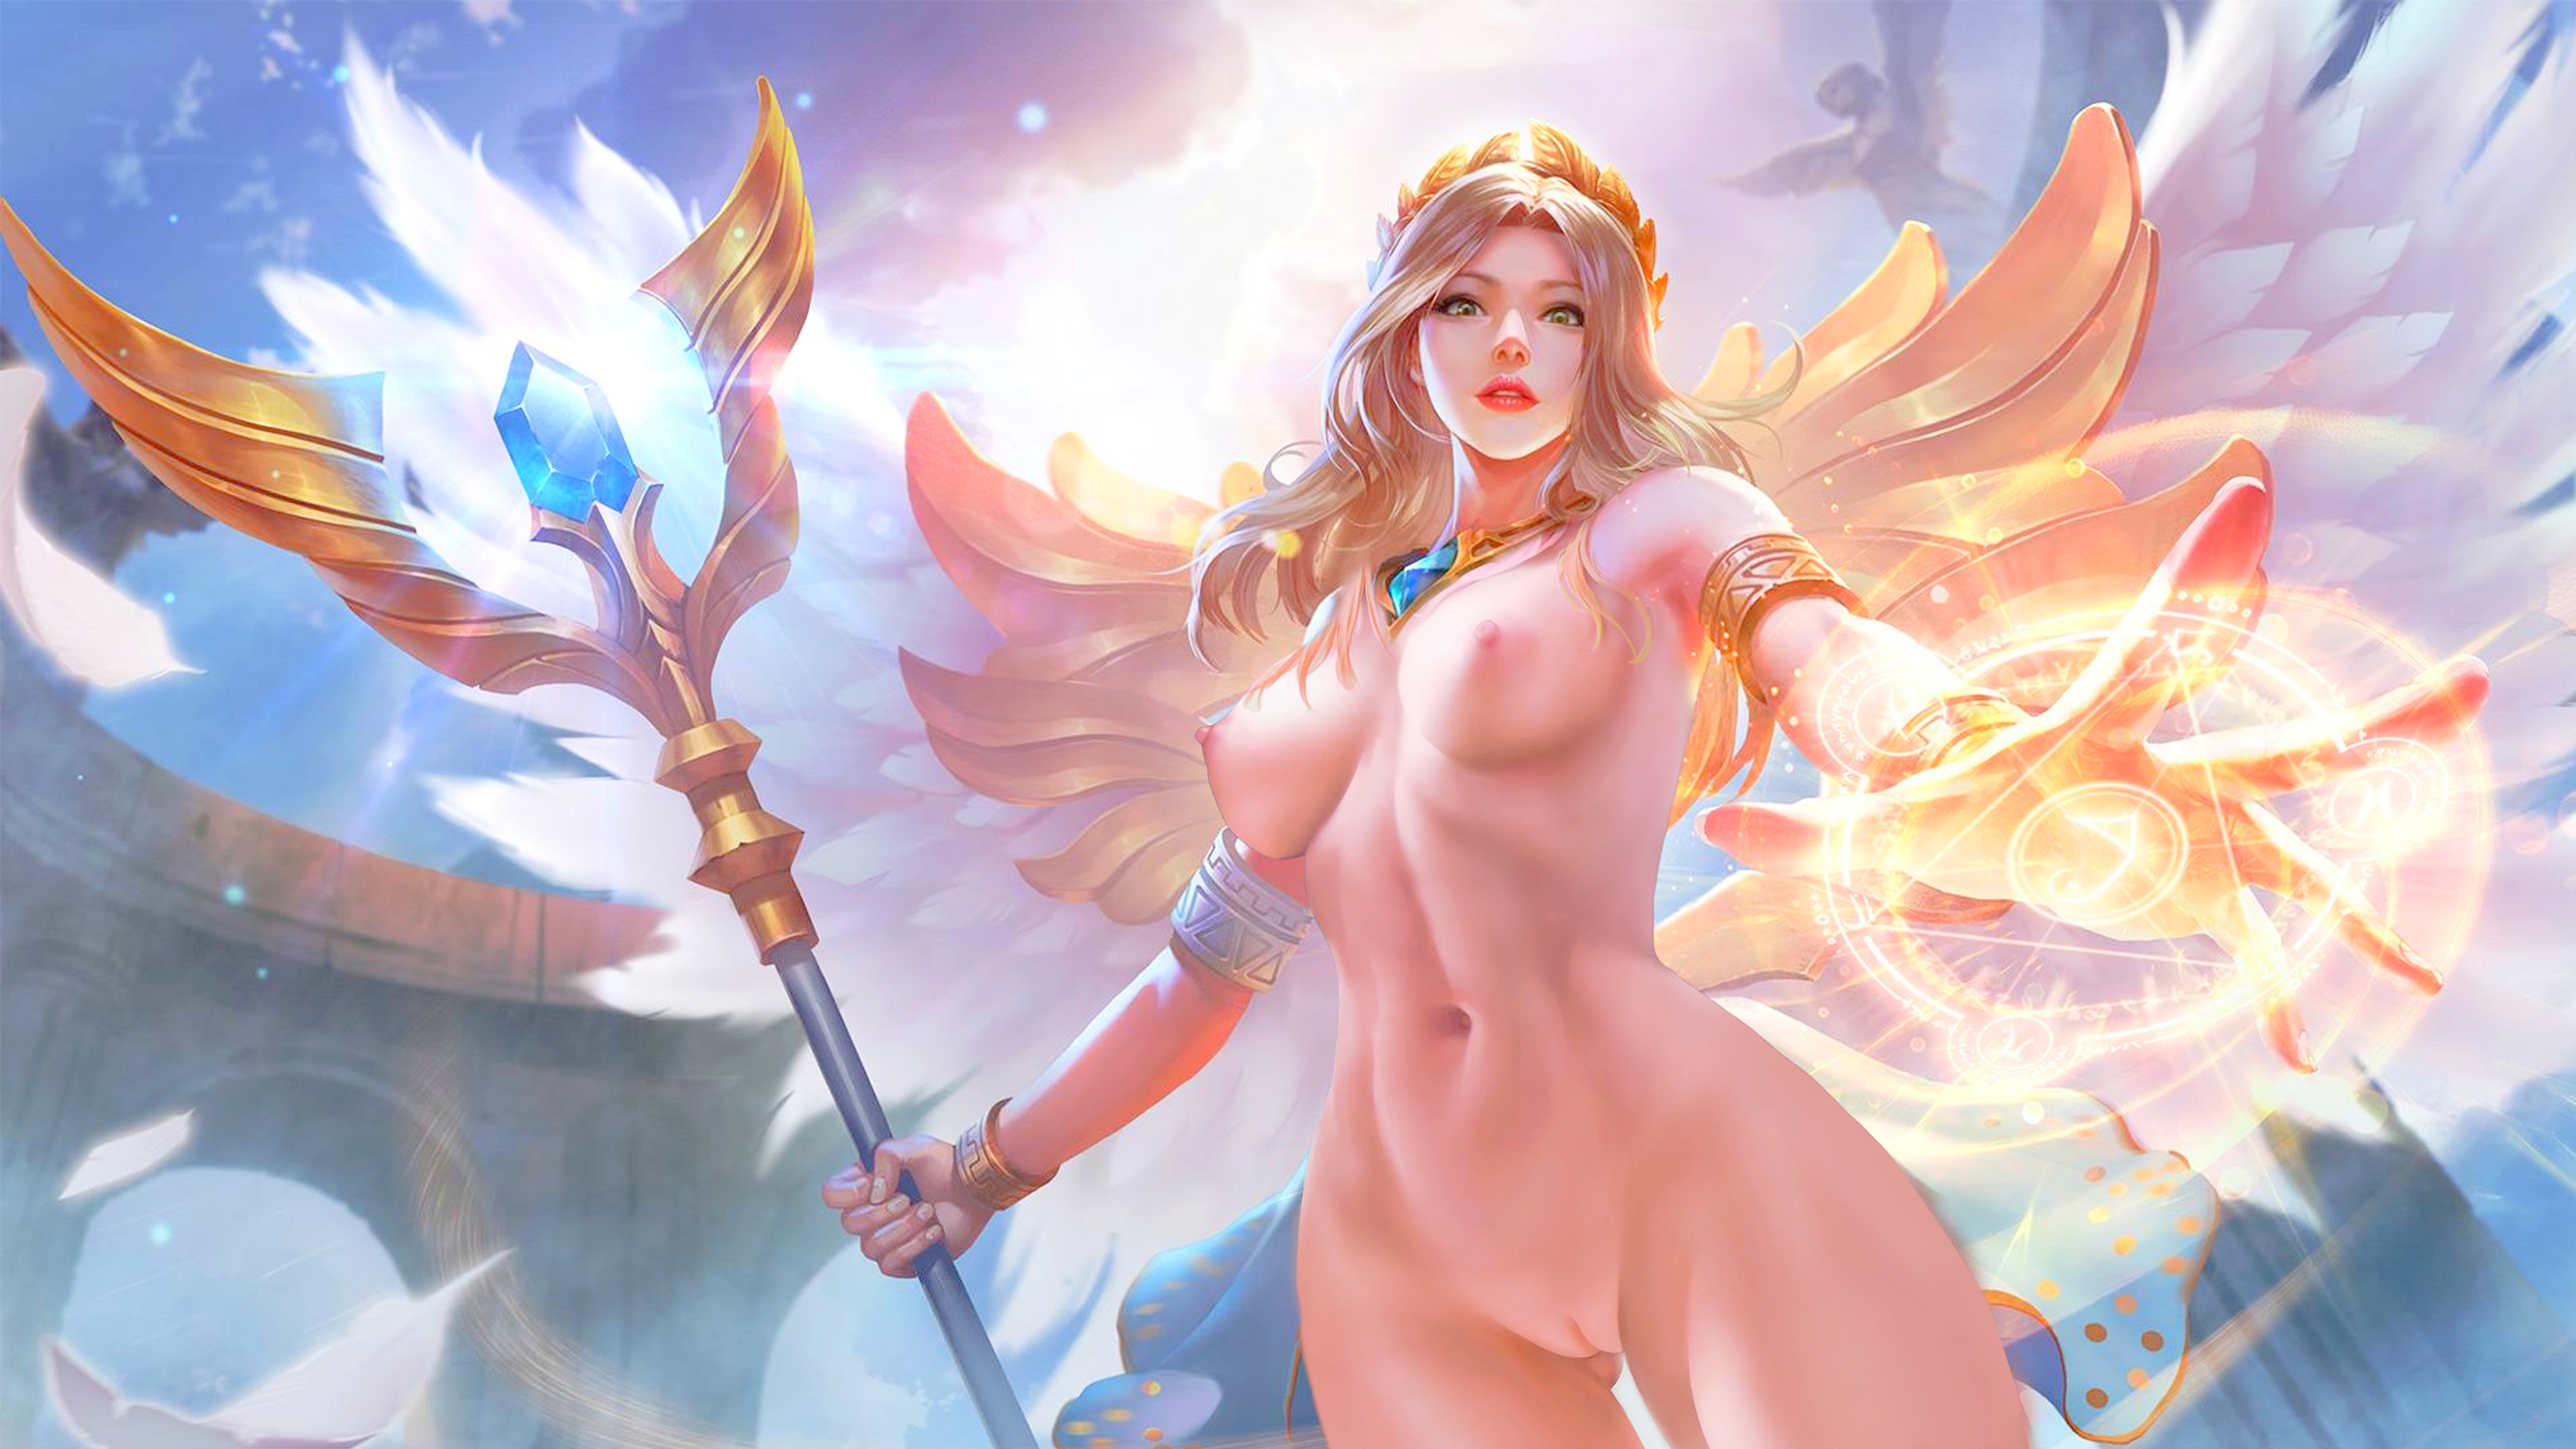 rafaela, mobile legends, realistic, angel, angel wings, large breasts, magi...